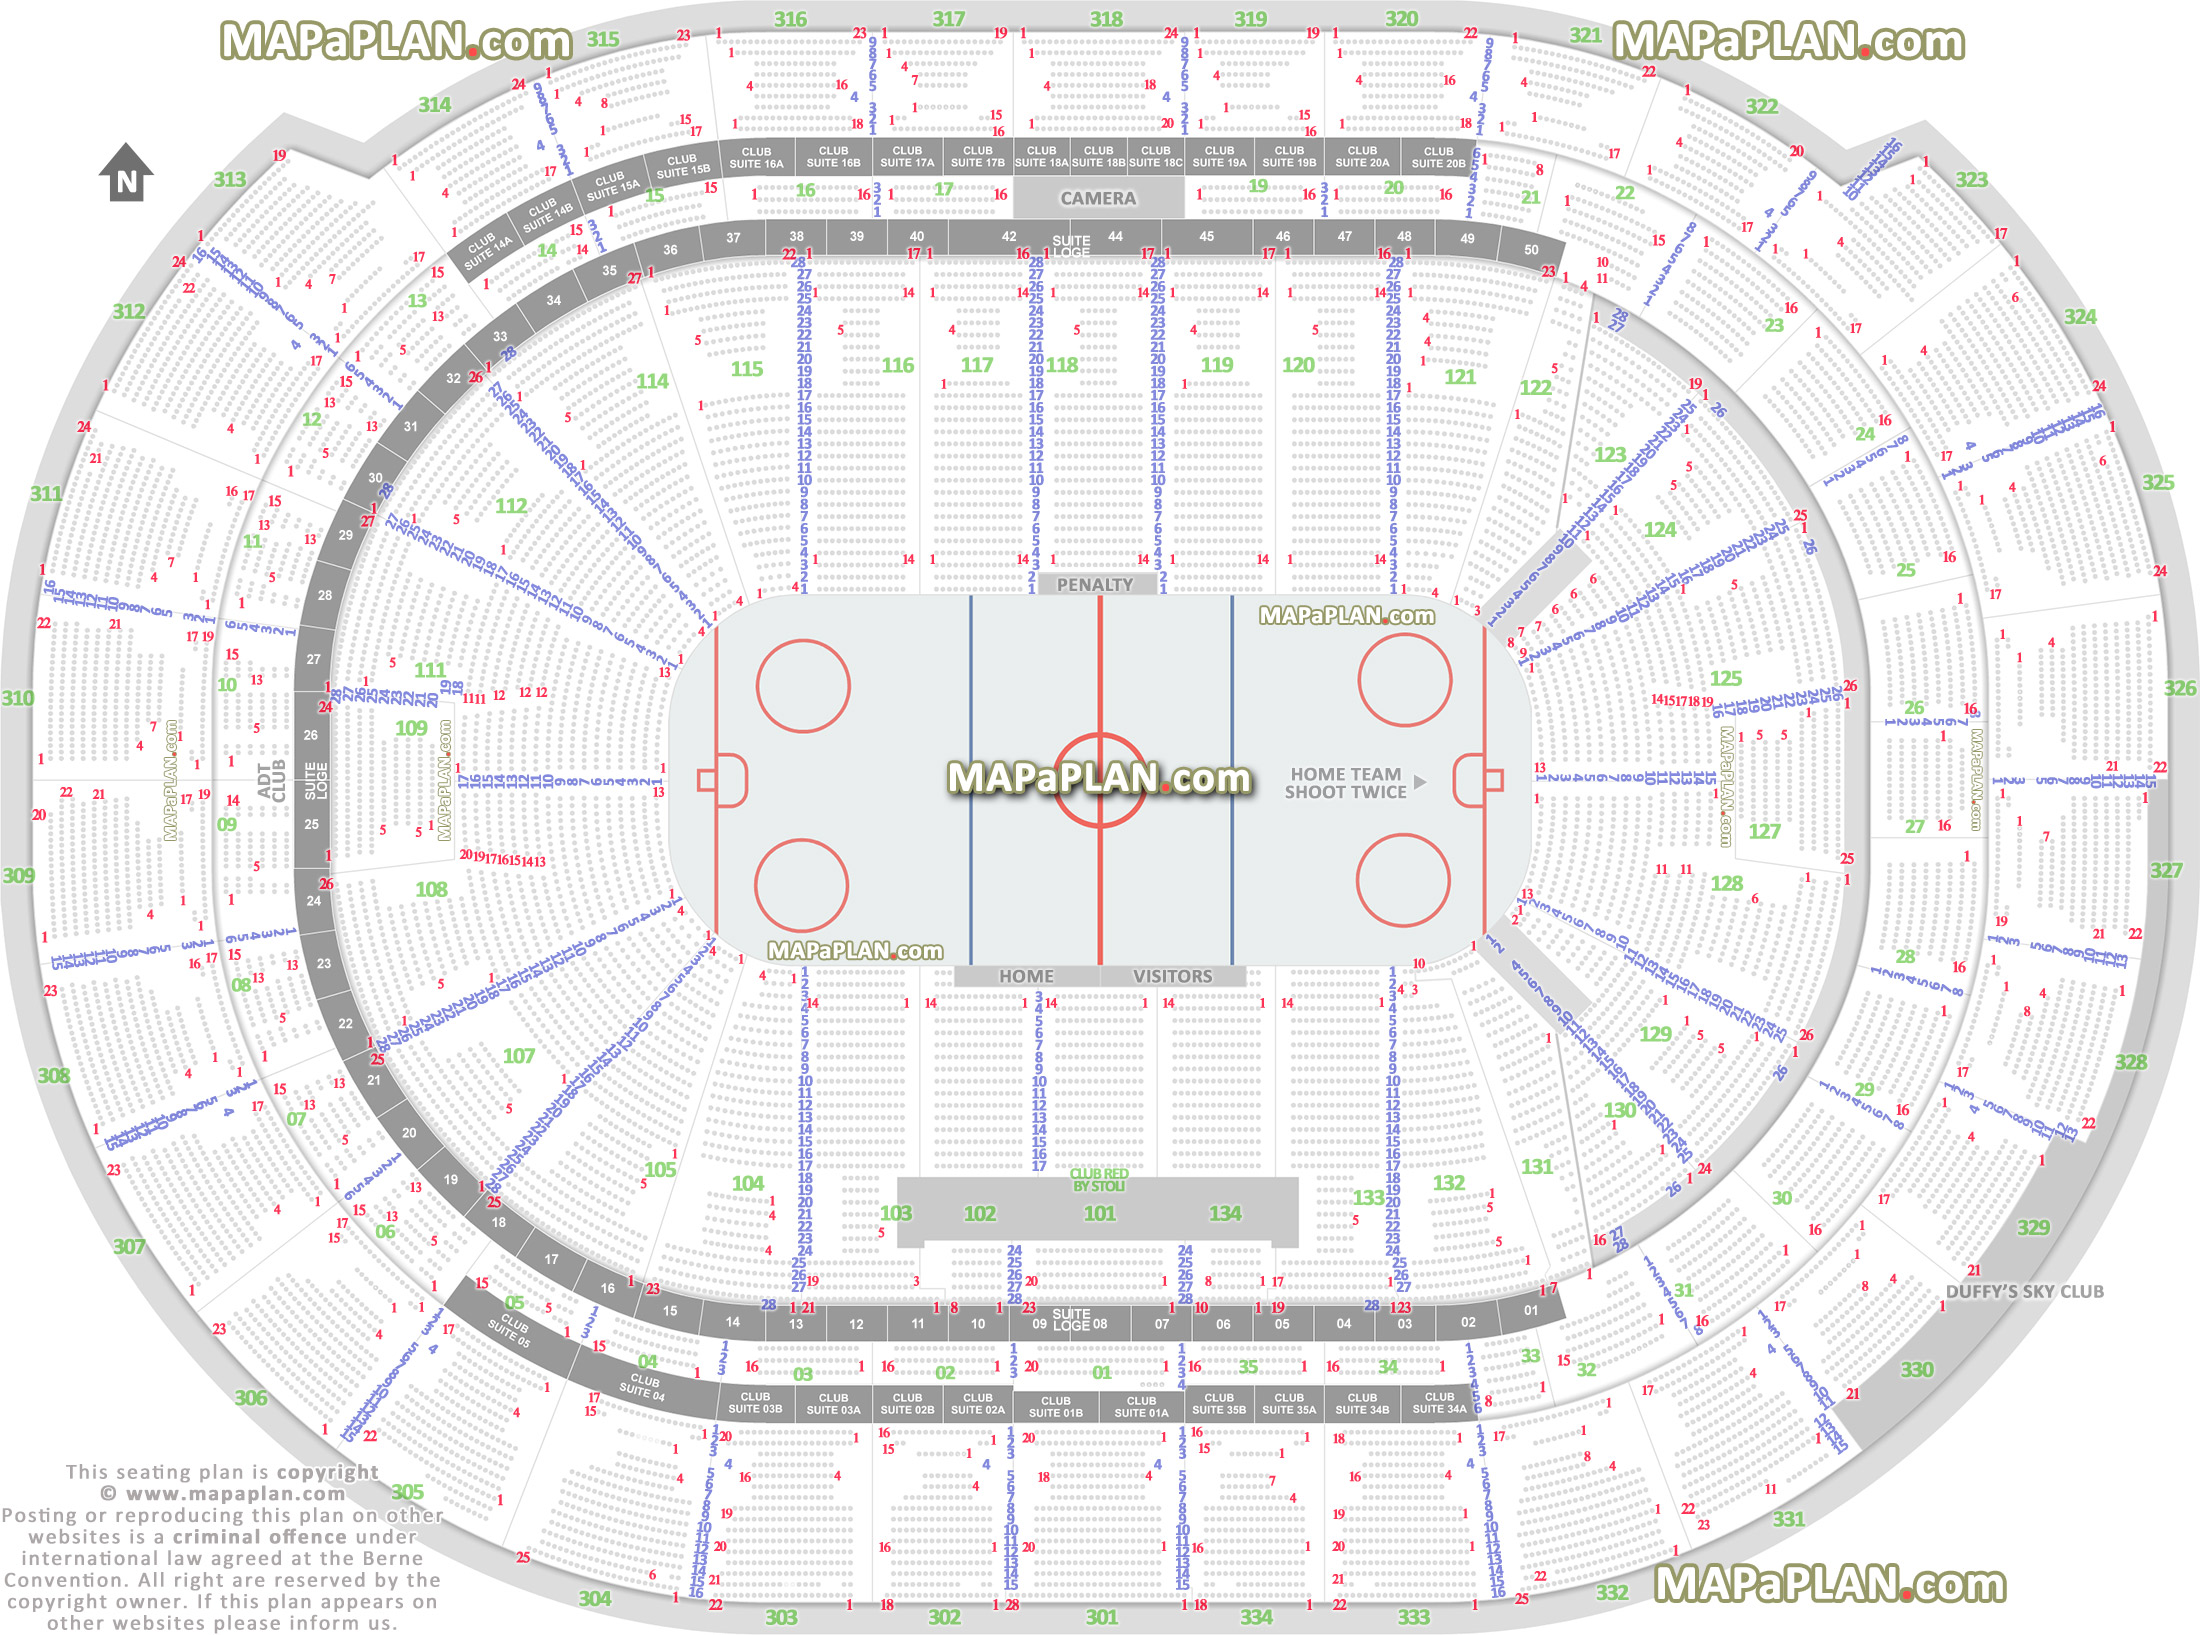 Panther Arena Seating Chart